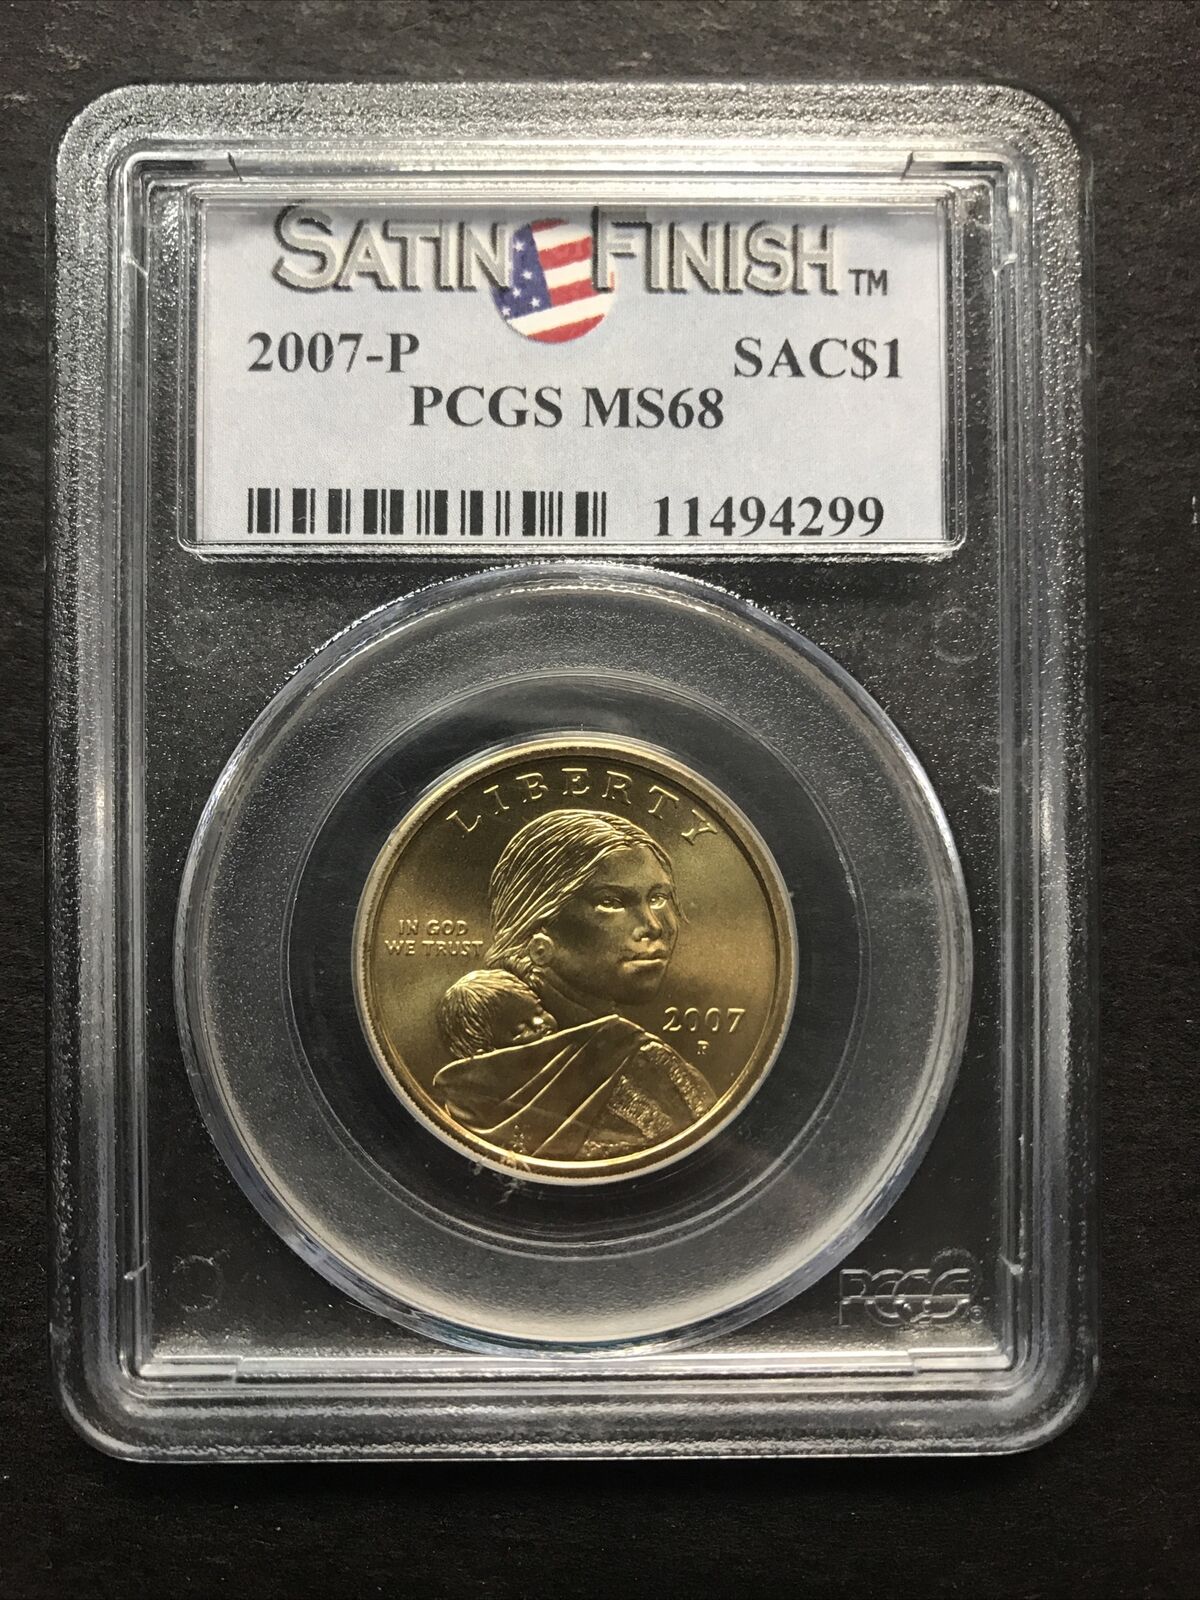 2007-p Pcgs Ms68 Sacagawea Eagle Dollar Coin Satin Finish! No Reserve! Brilliant